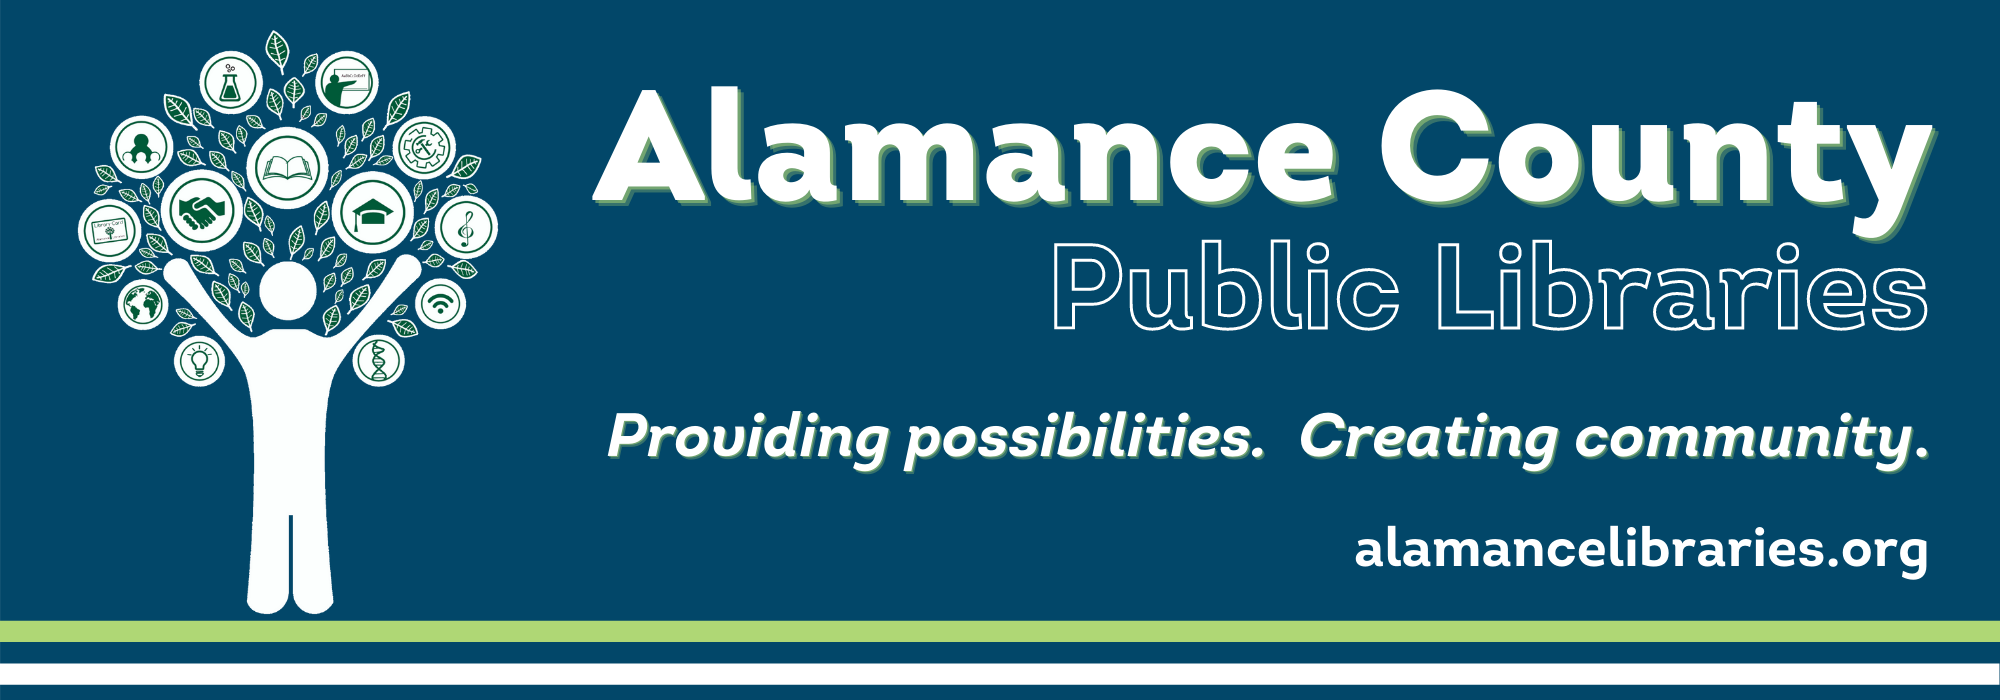 Alamance County Public Libraries vision